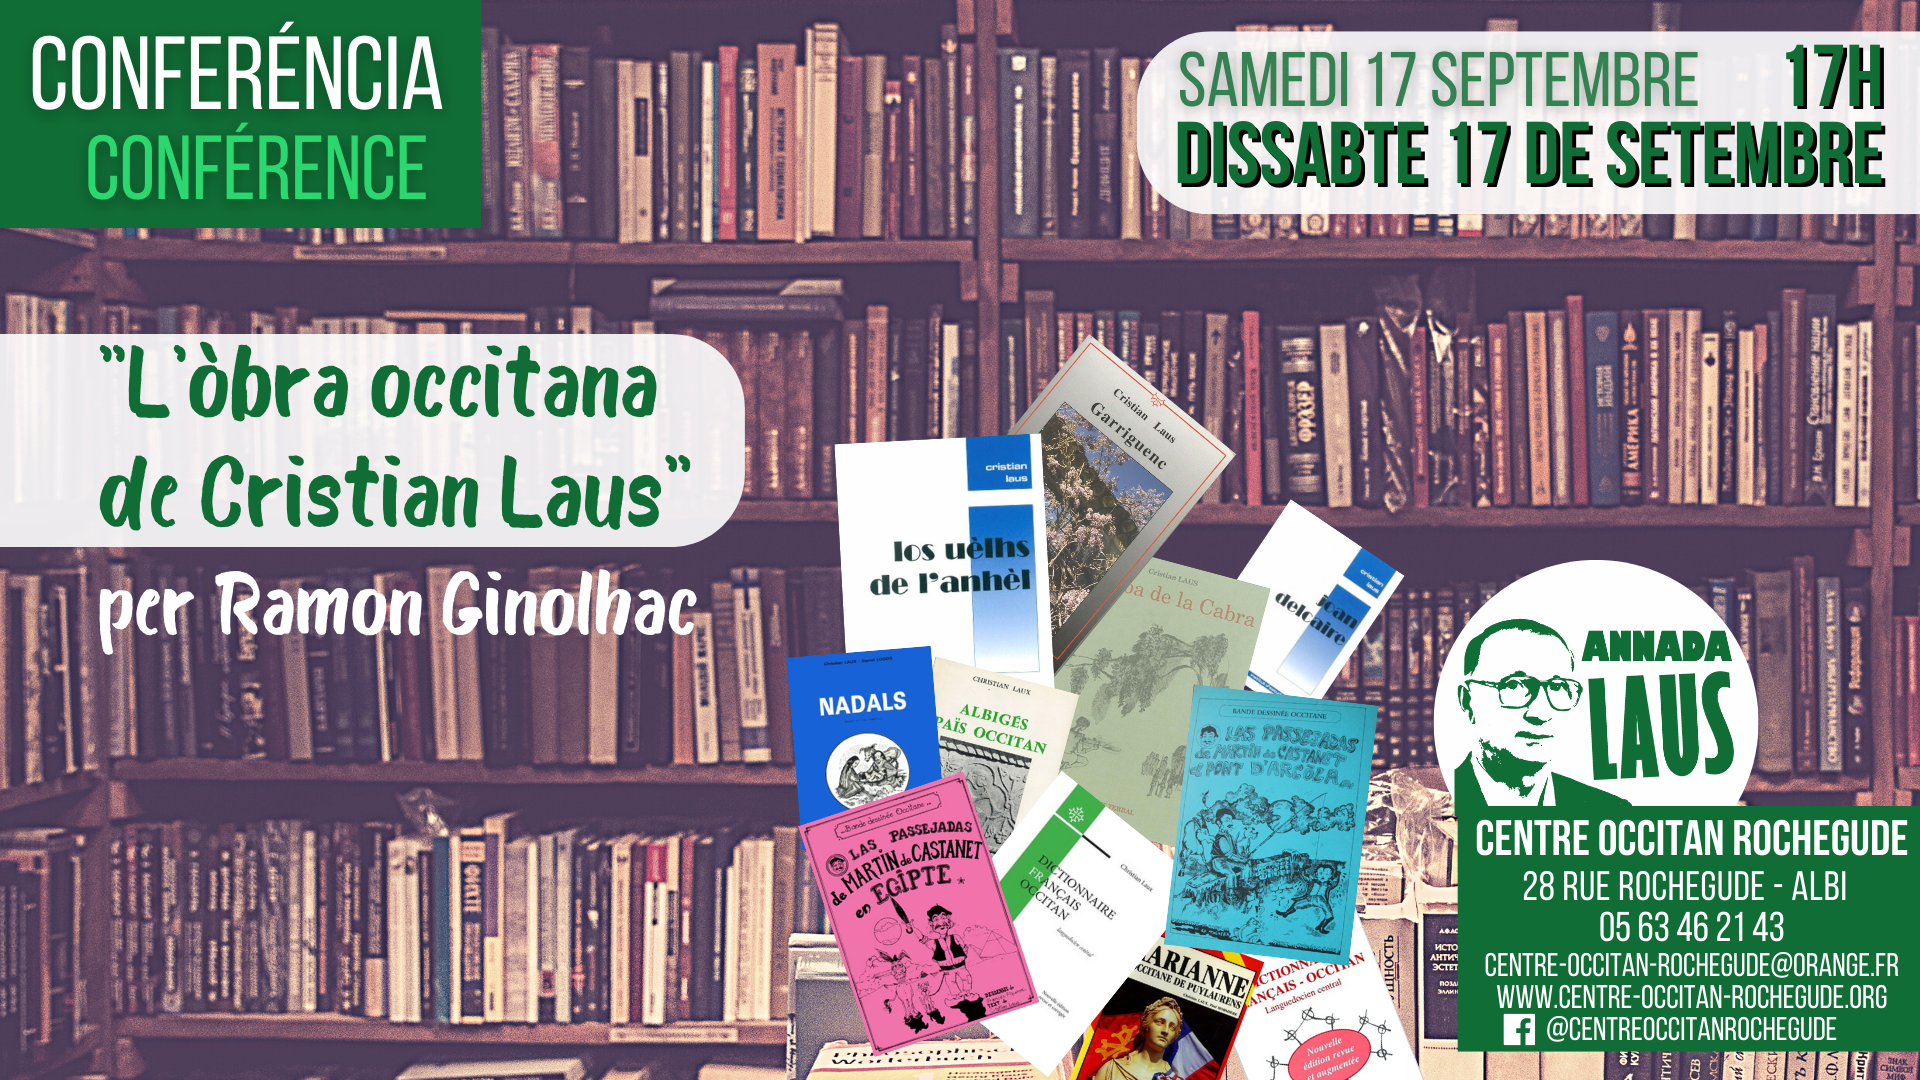 Lire la suite à propos de l’article « L’òbra occitana de Cristian Laus » per Ramon Ginolhac